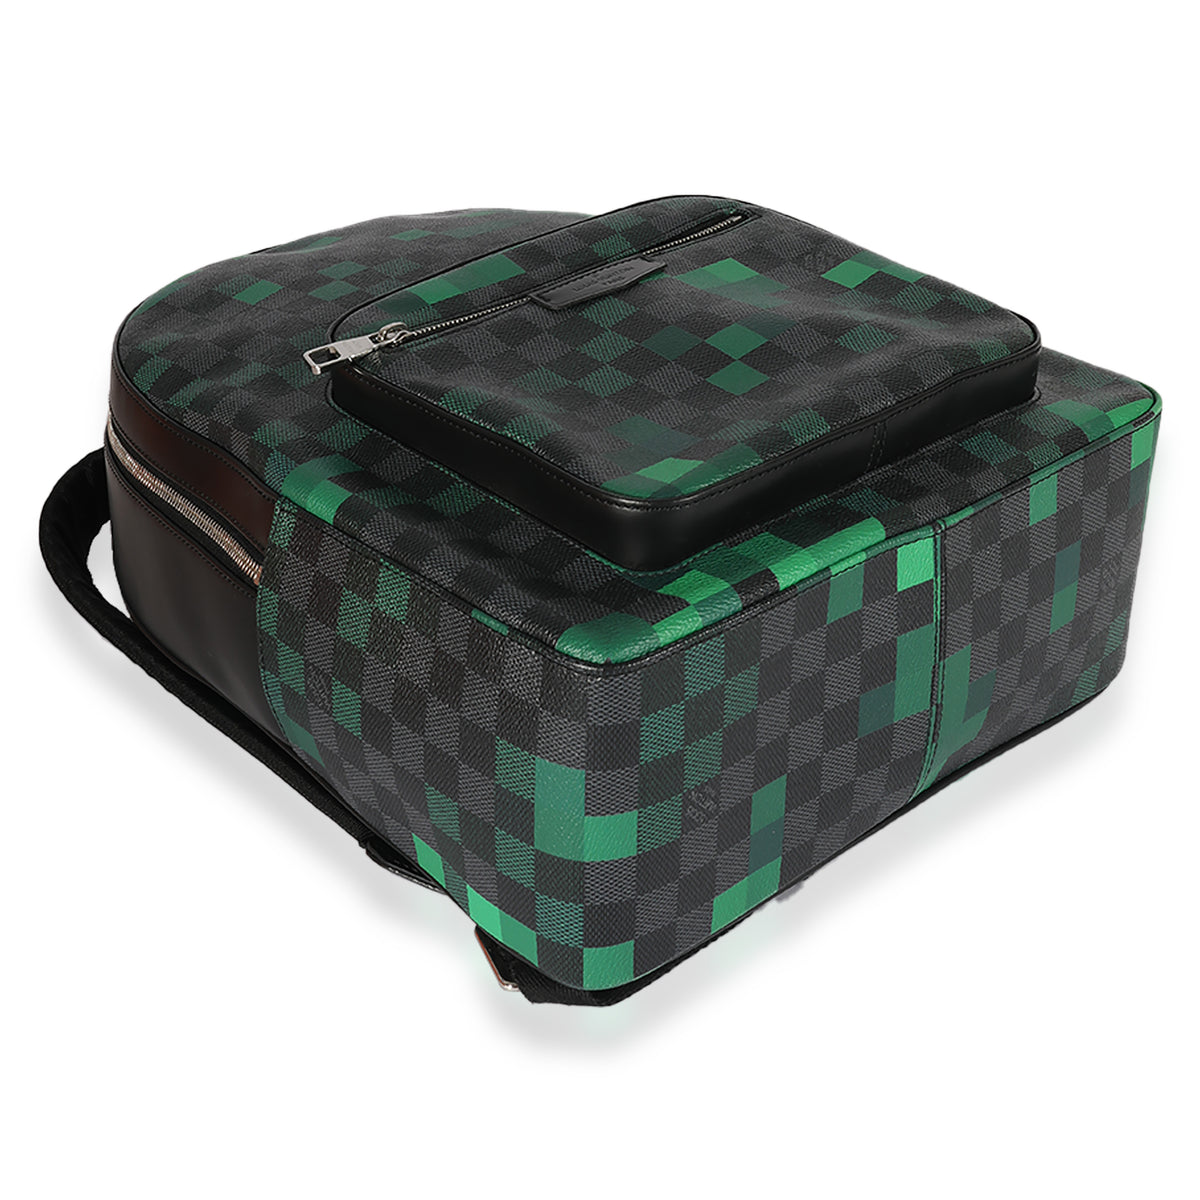 Pre-owned Josh Backpack Damier Graphite Pixel Green